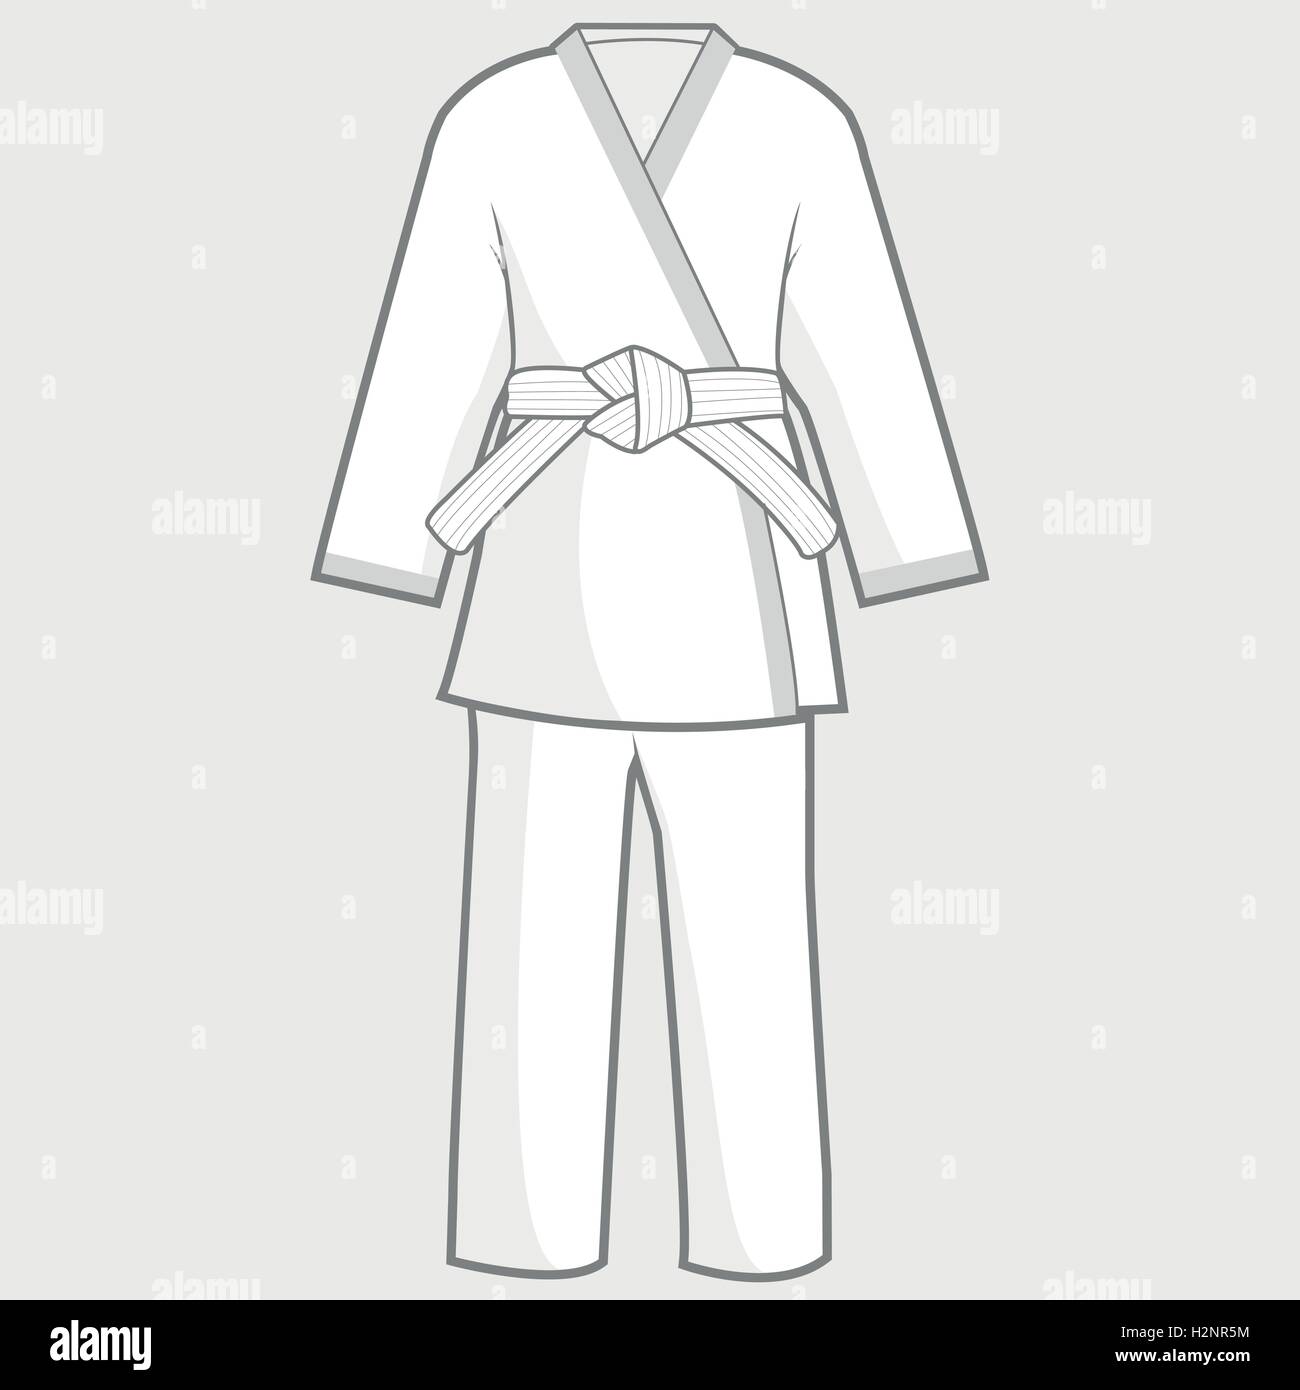 Martial arts kimono suit. Stock Vector